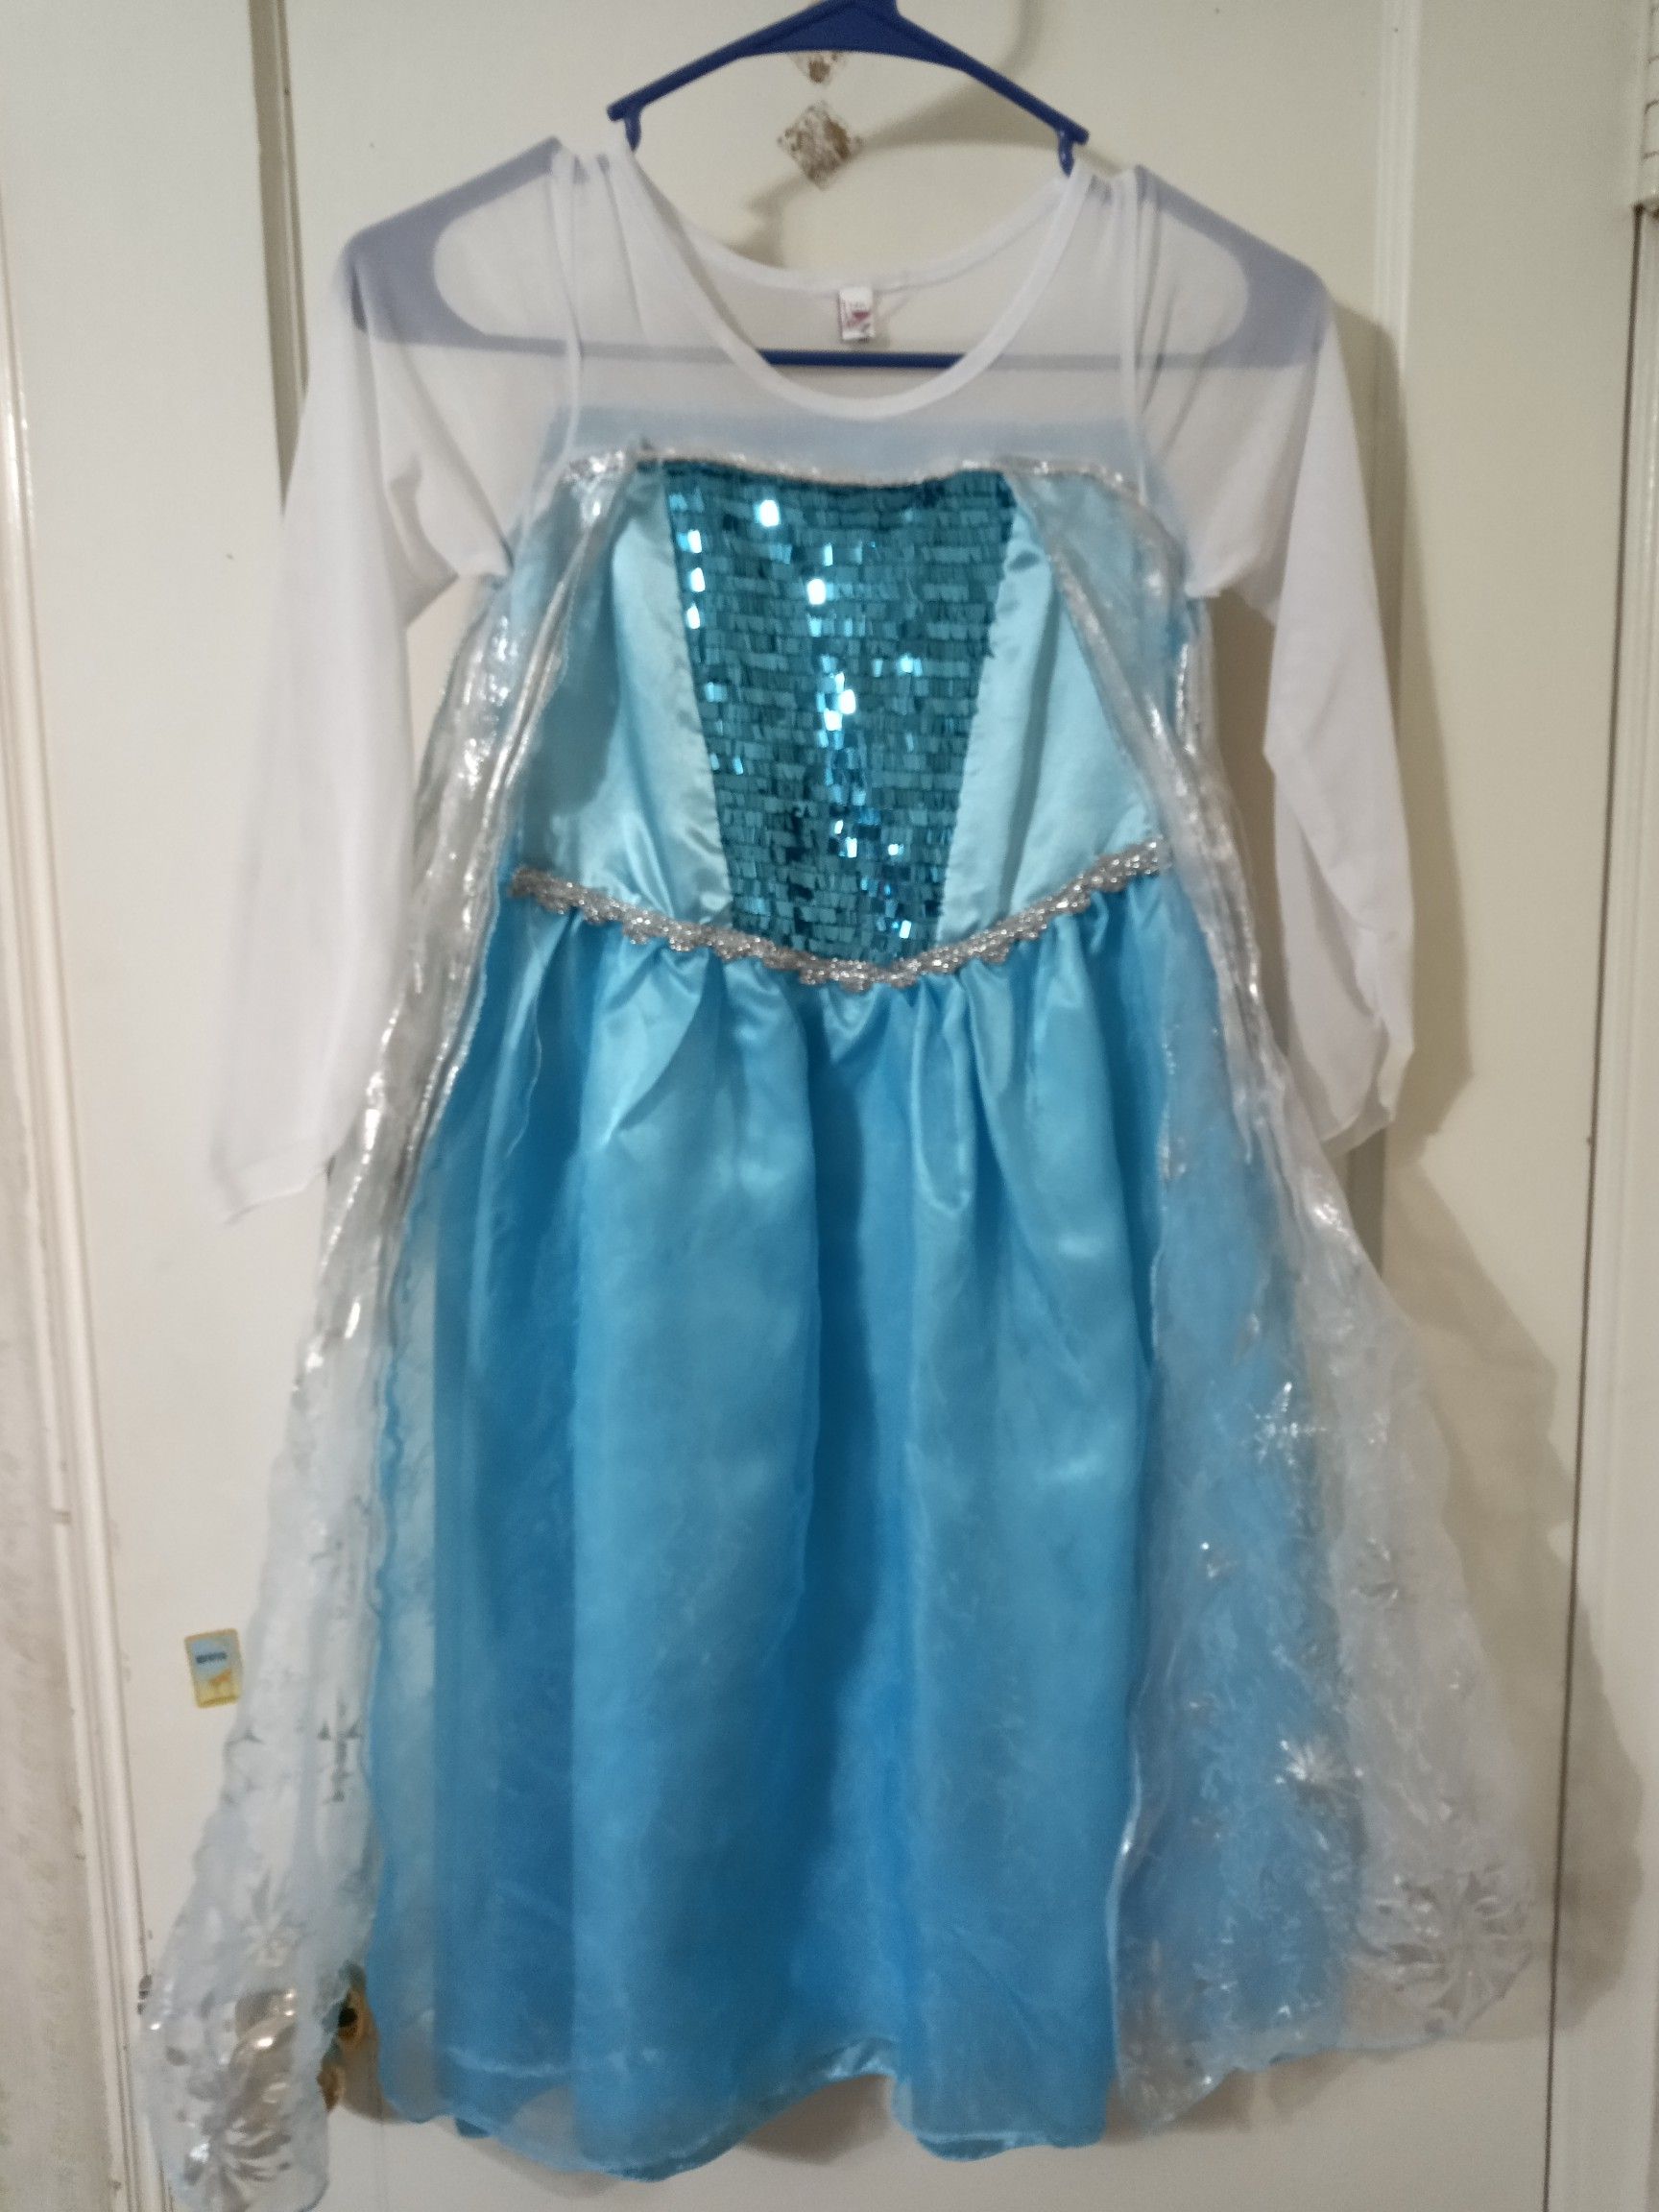 Disney Frozen Elsa costume, used a few times, size 7/8